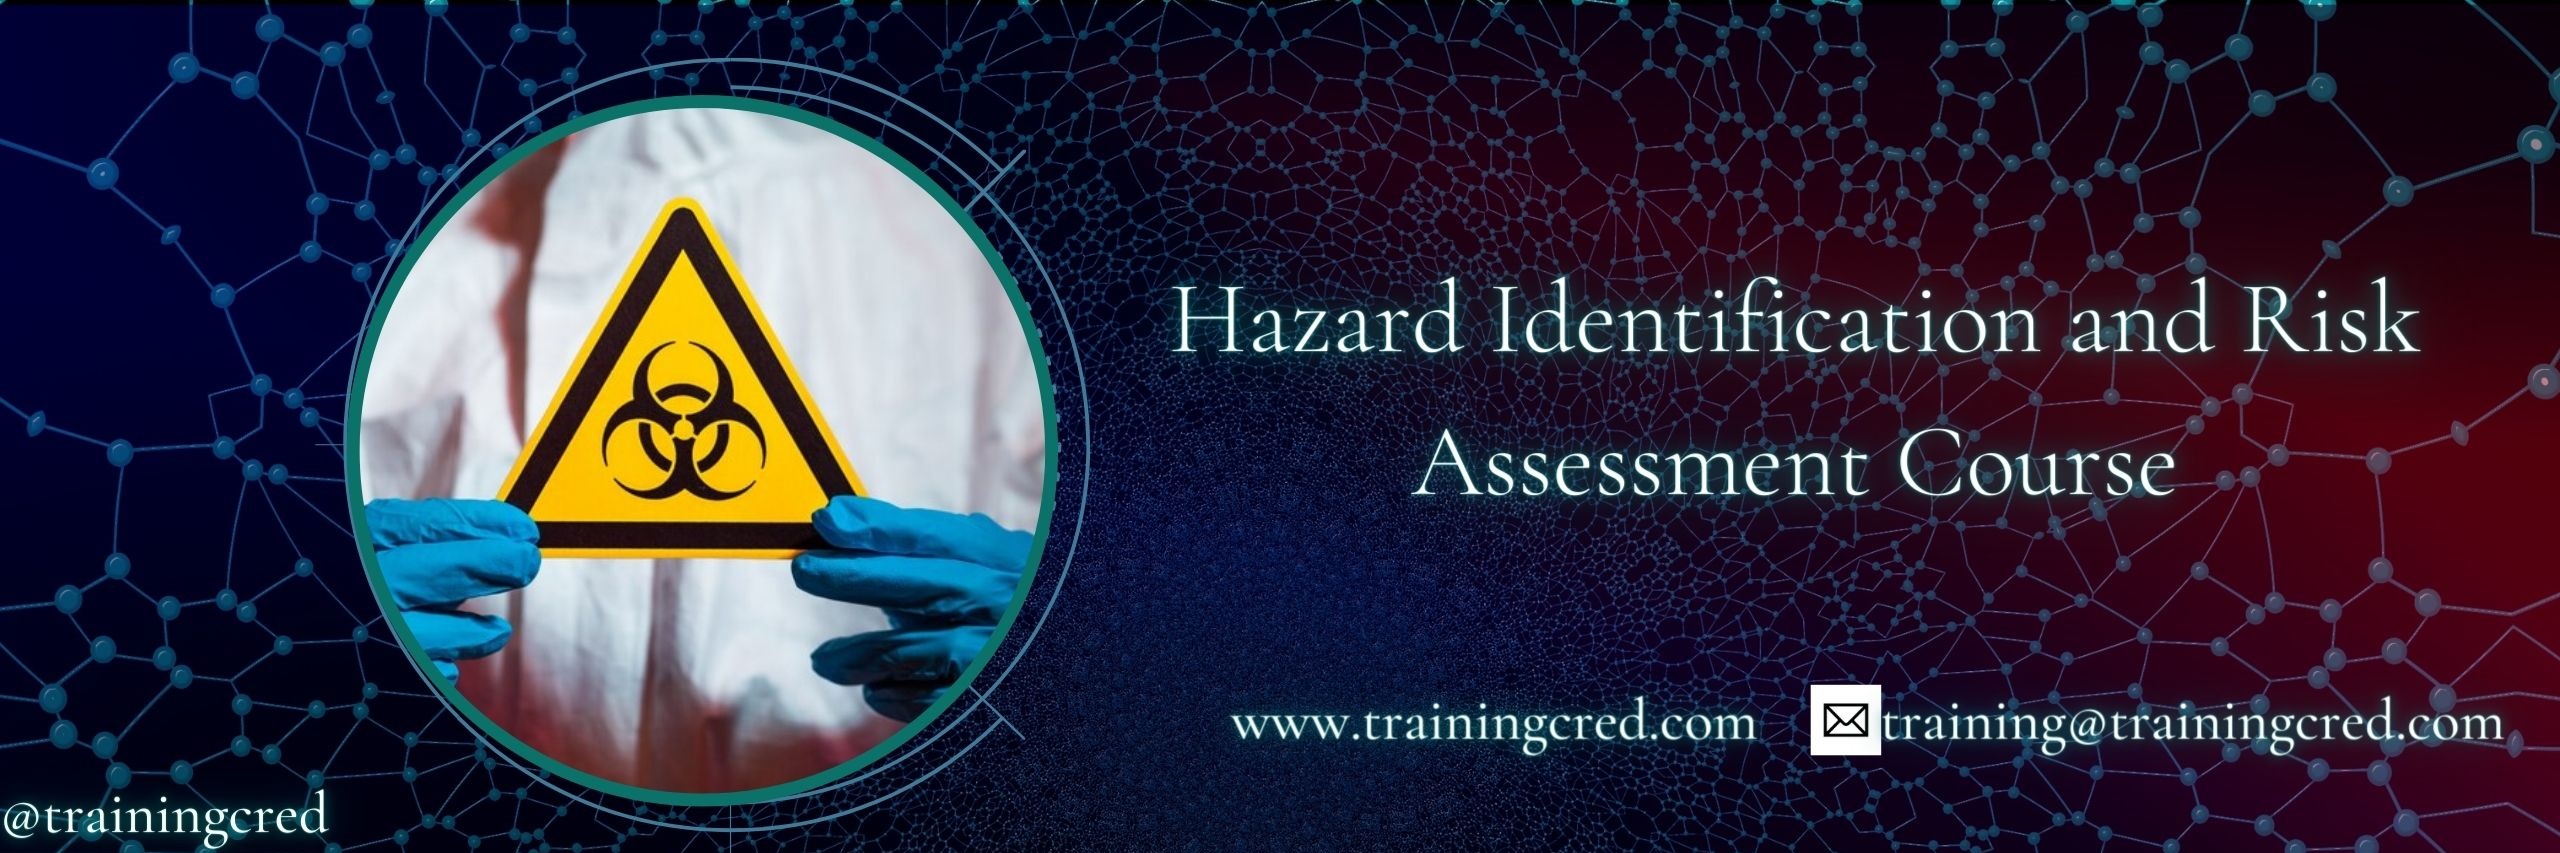 Hazard Identification and Risk Assessment Training